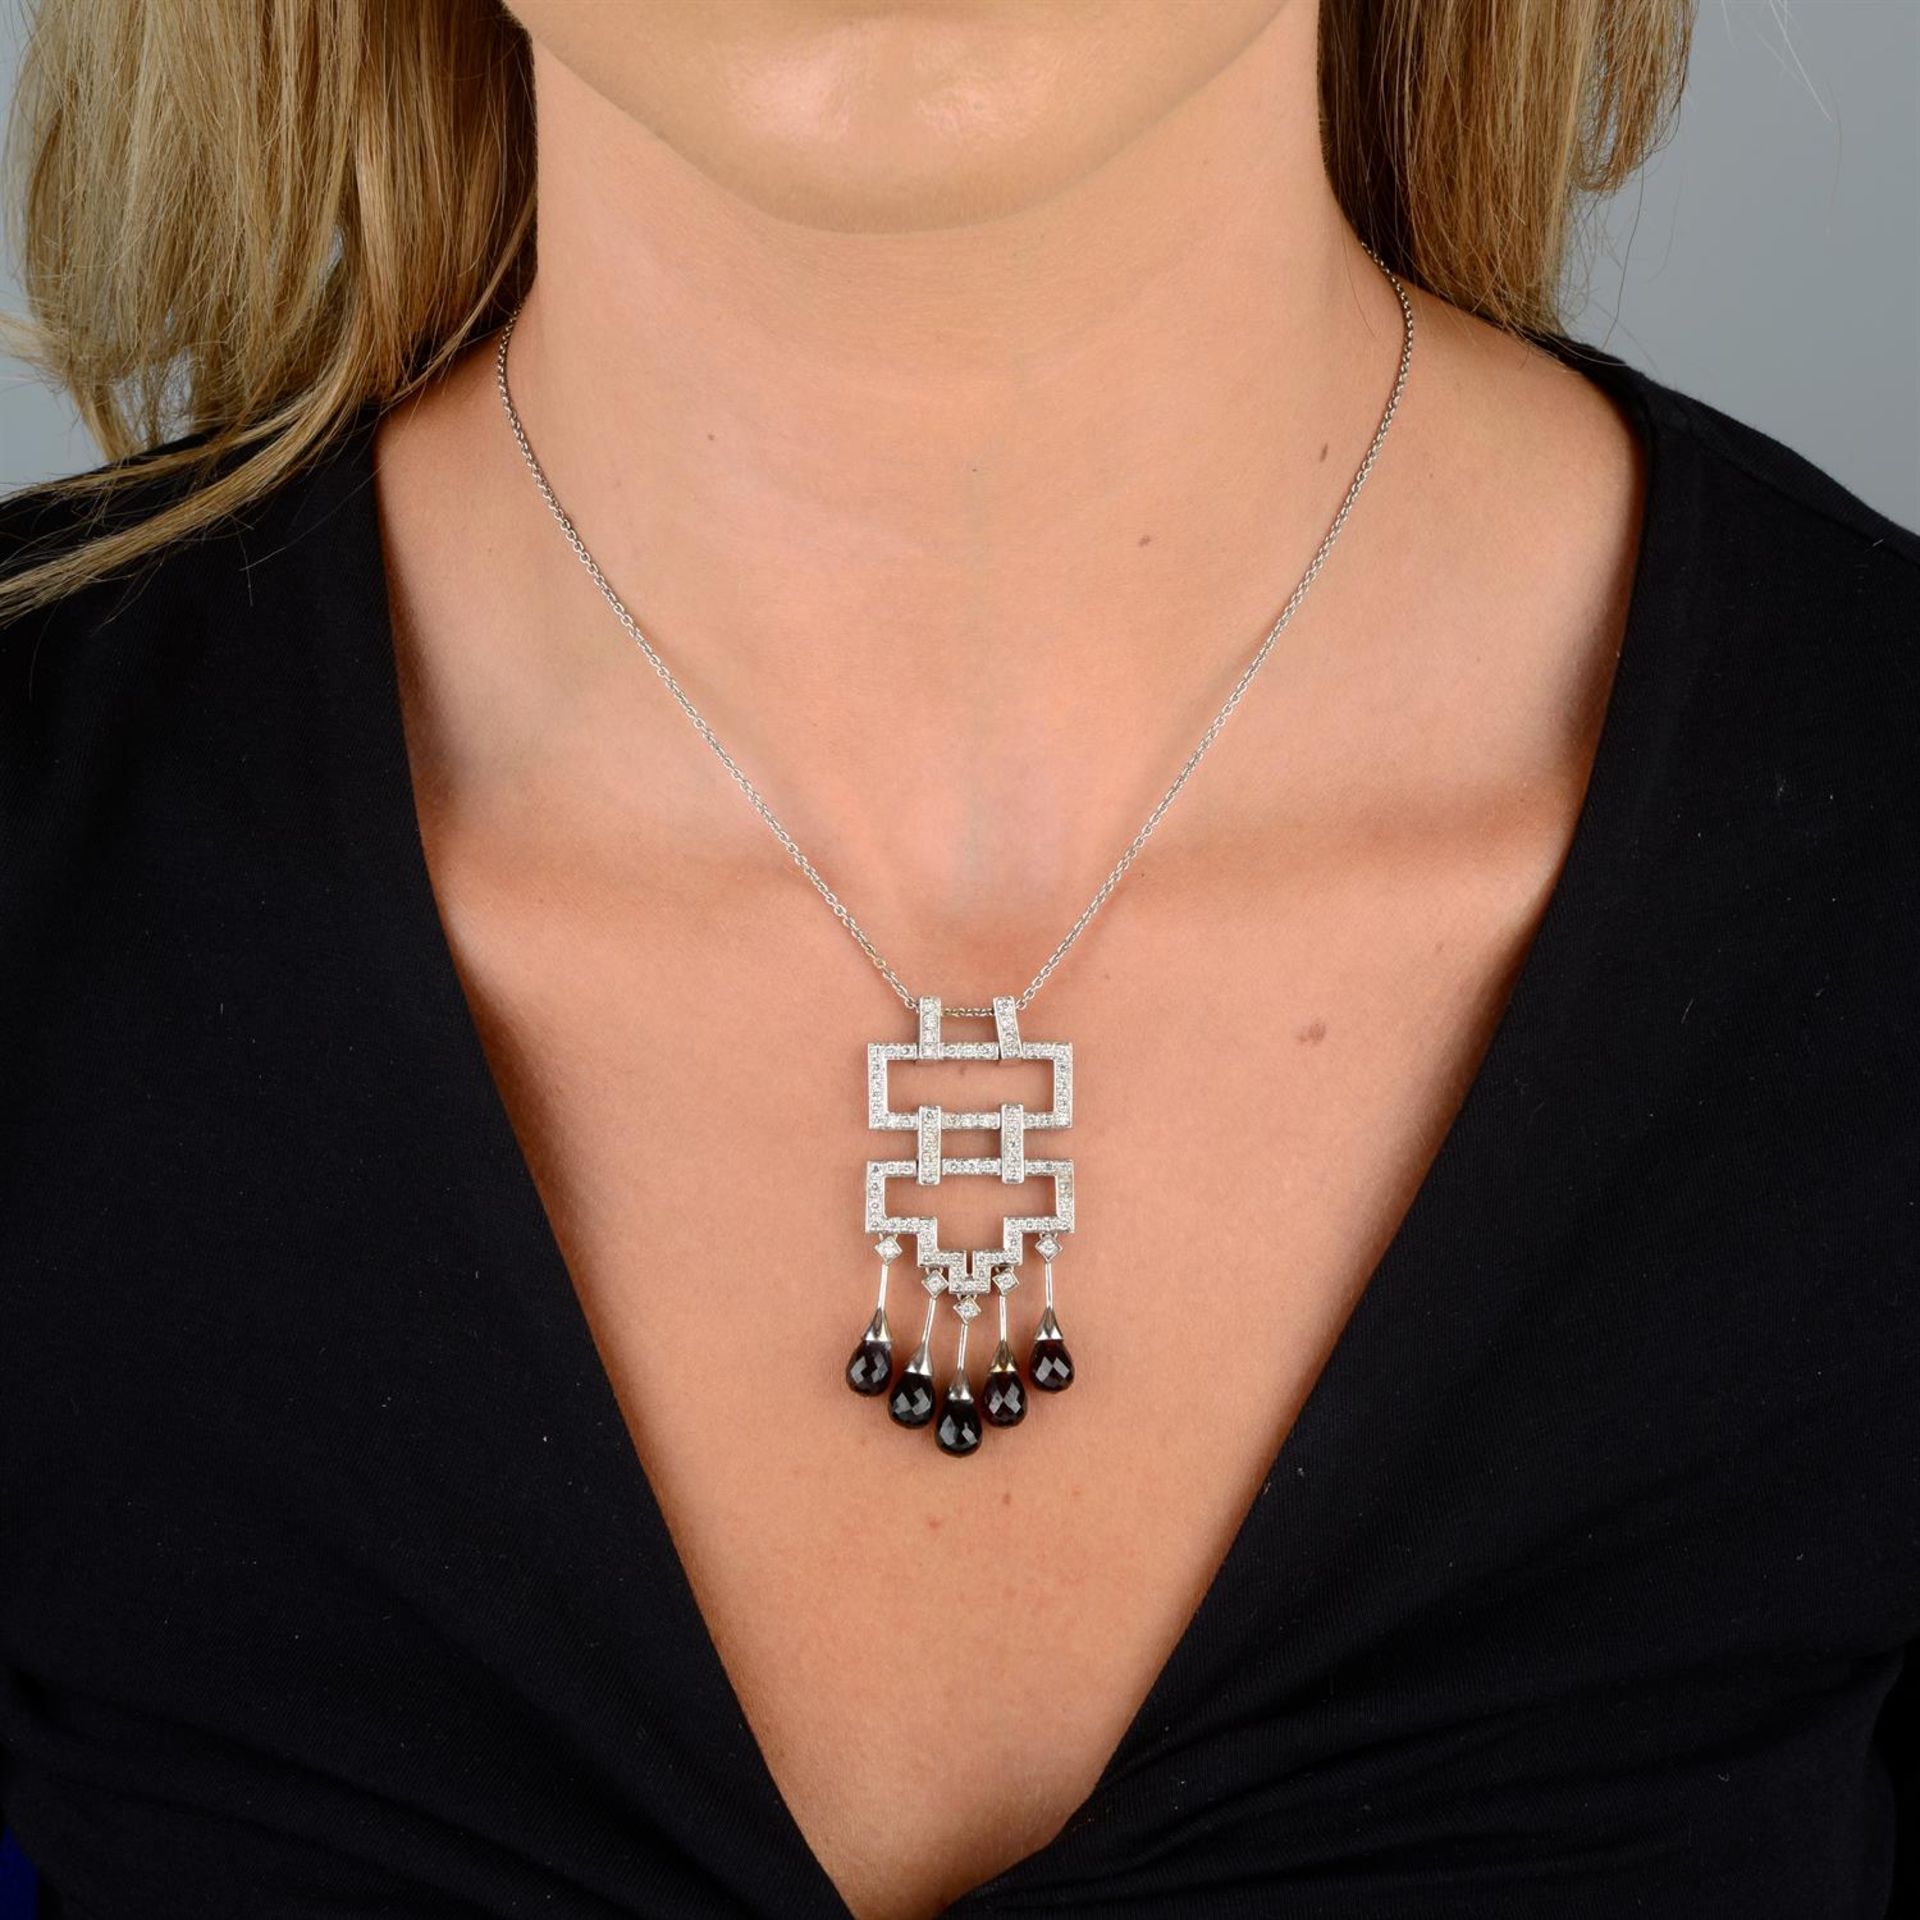 18ct gold diamond & garnet pendant, with chain - Image 4 of 4